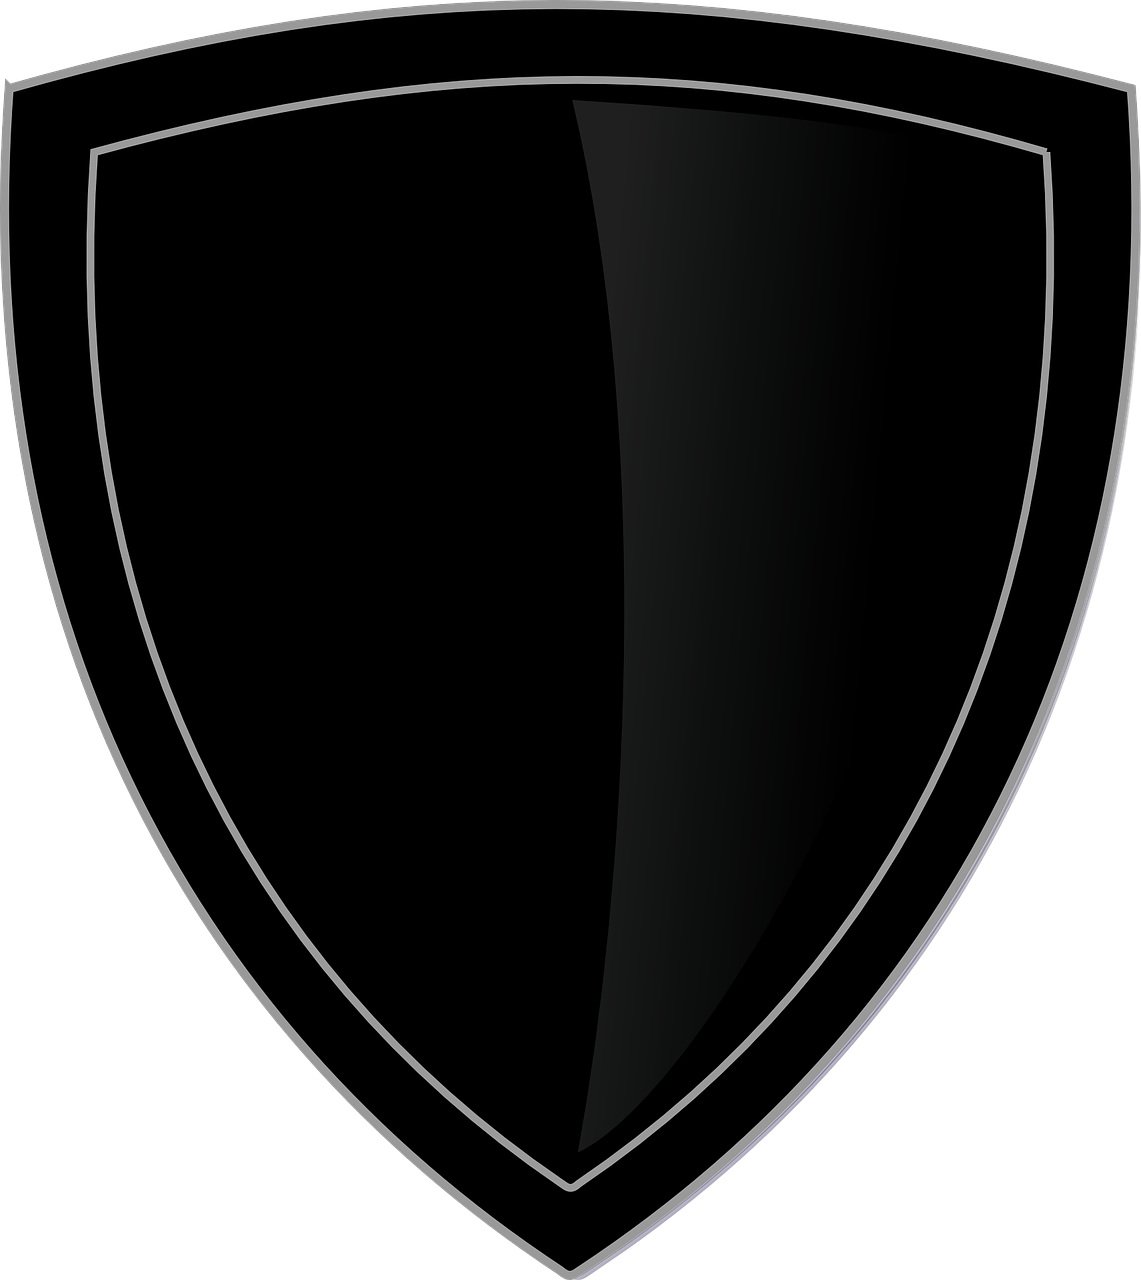 Shield Logo Plain Black Emblem Png Picpng